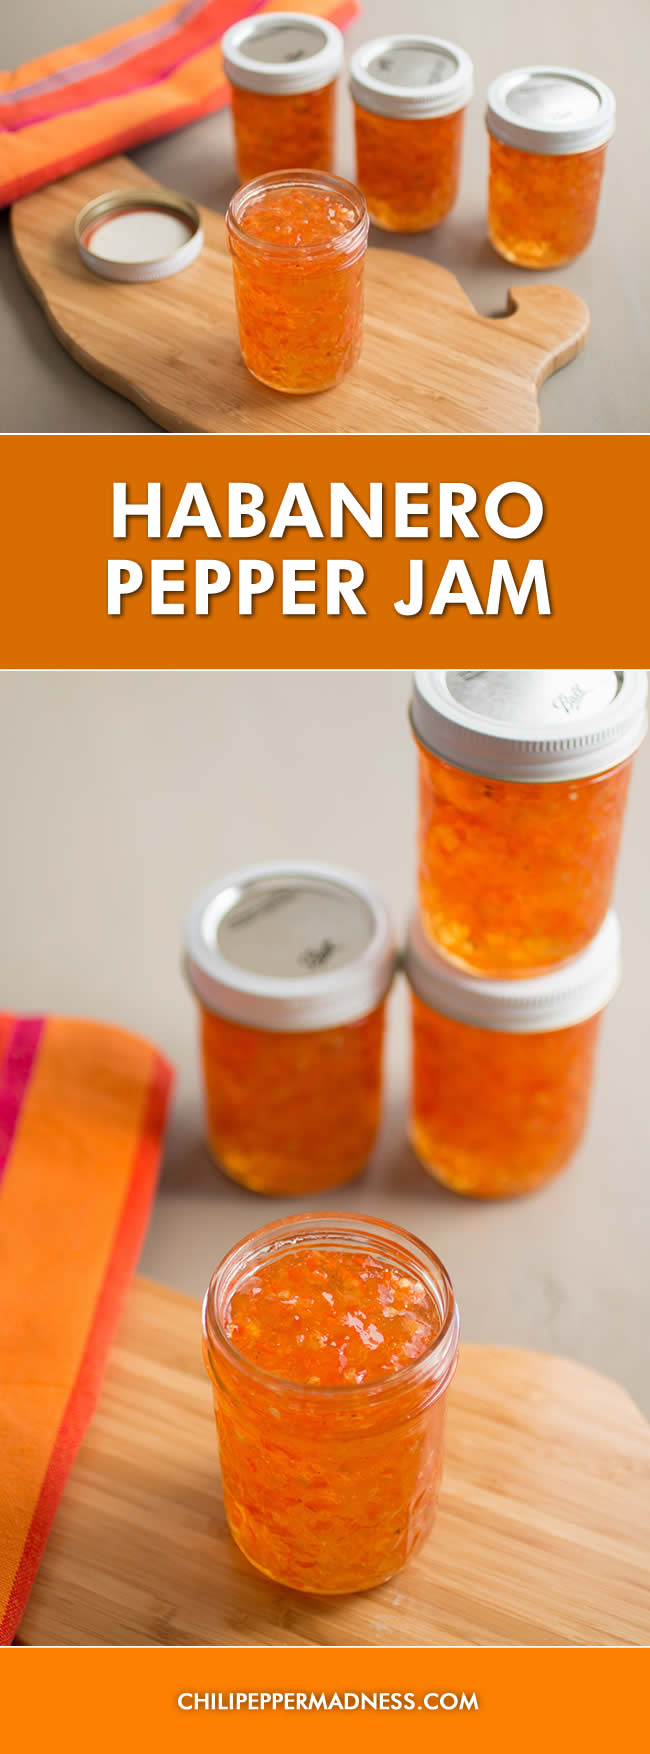 Habanero Pepper Jam - Recipe | ChiliPepperMadness.com